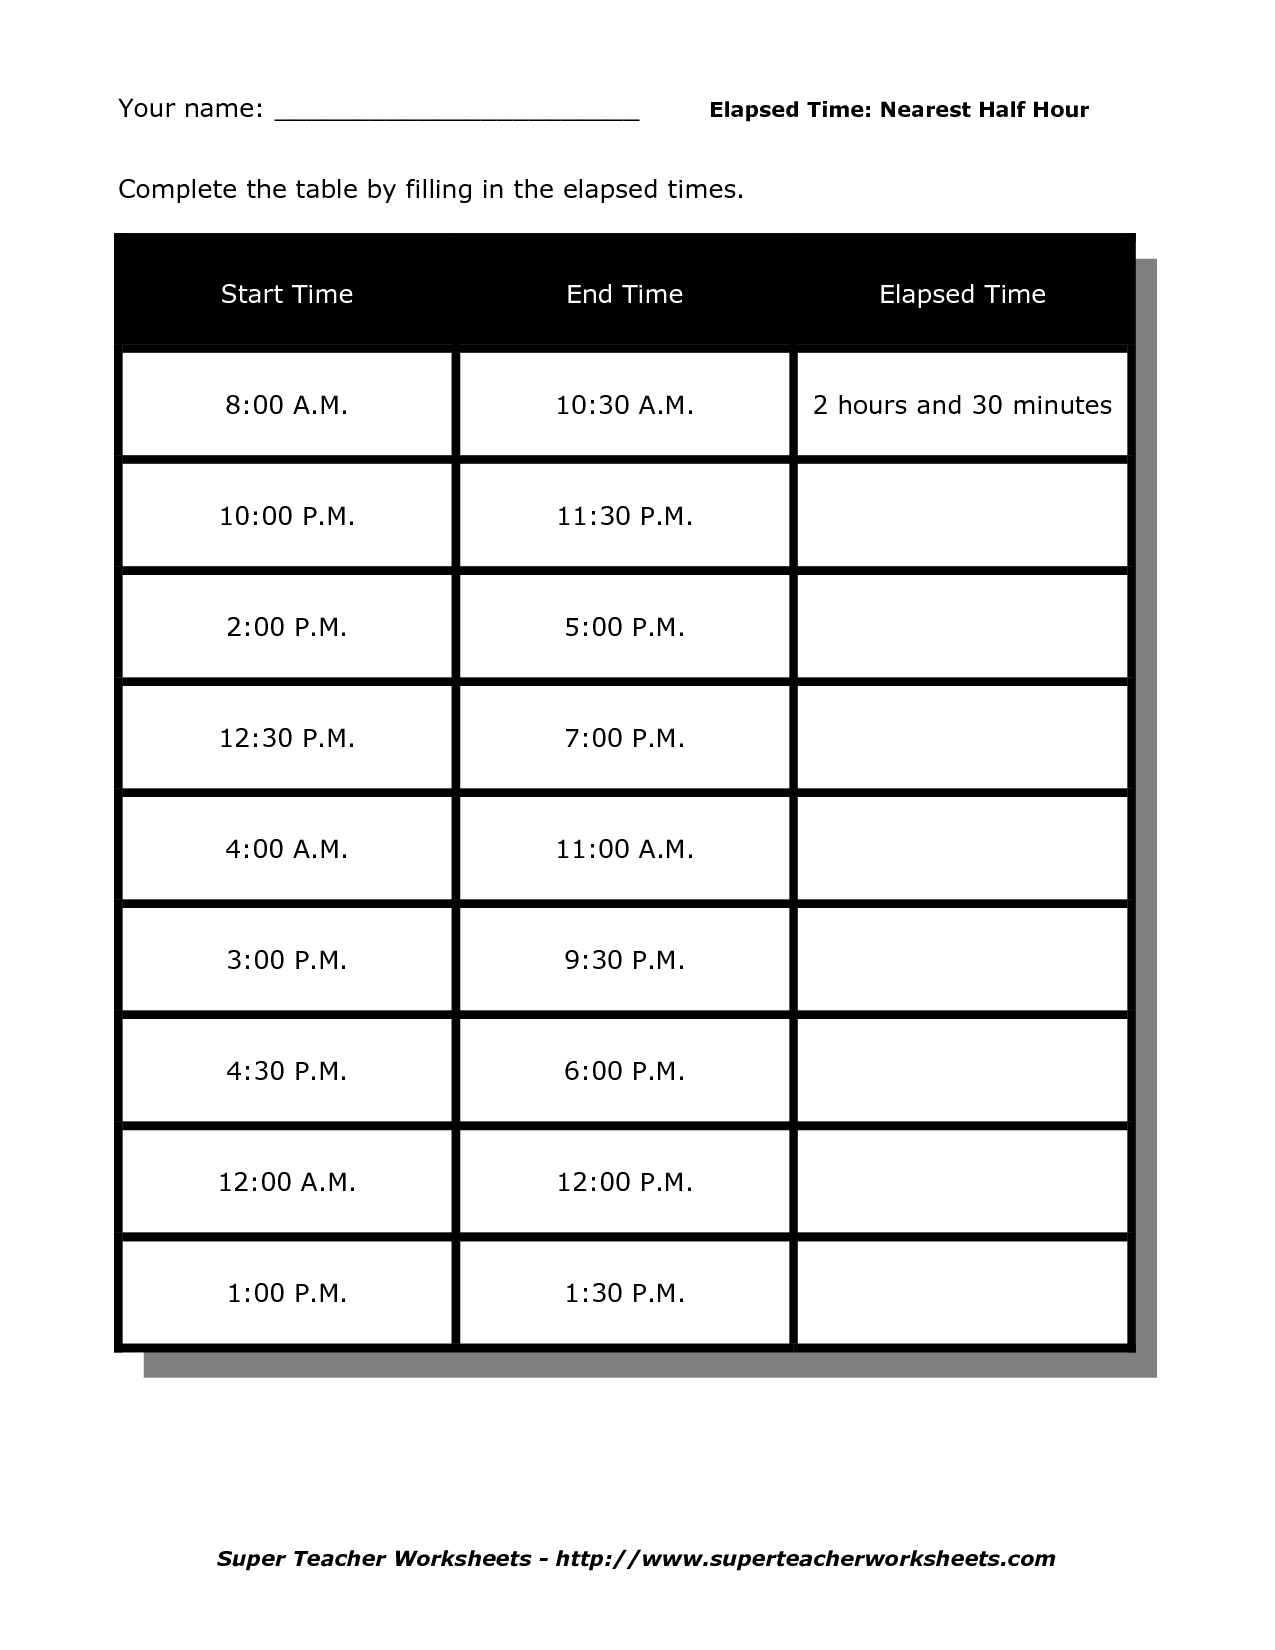 free-printable-6th-grade-worksheets-2-worksheets-free